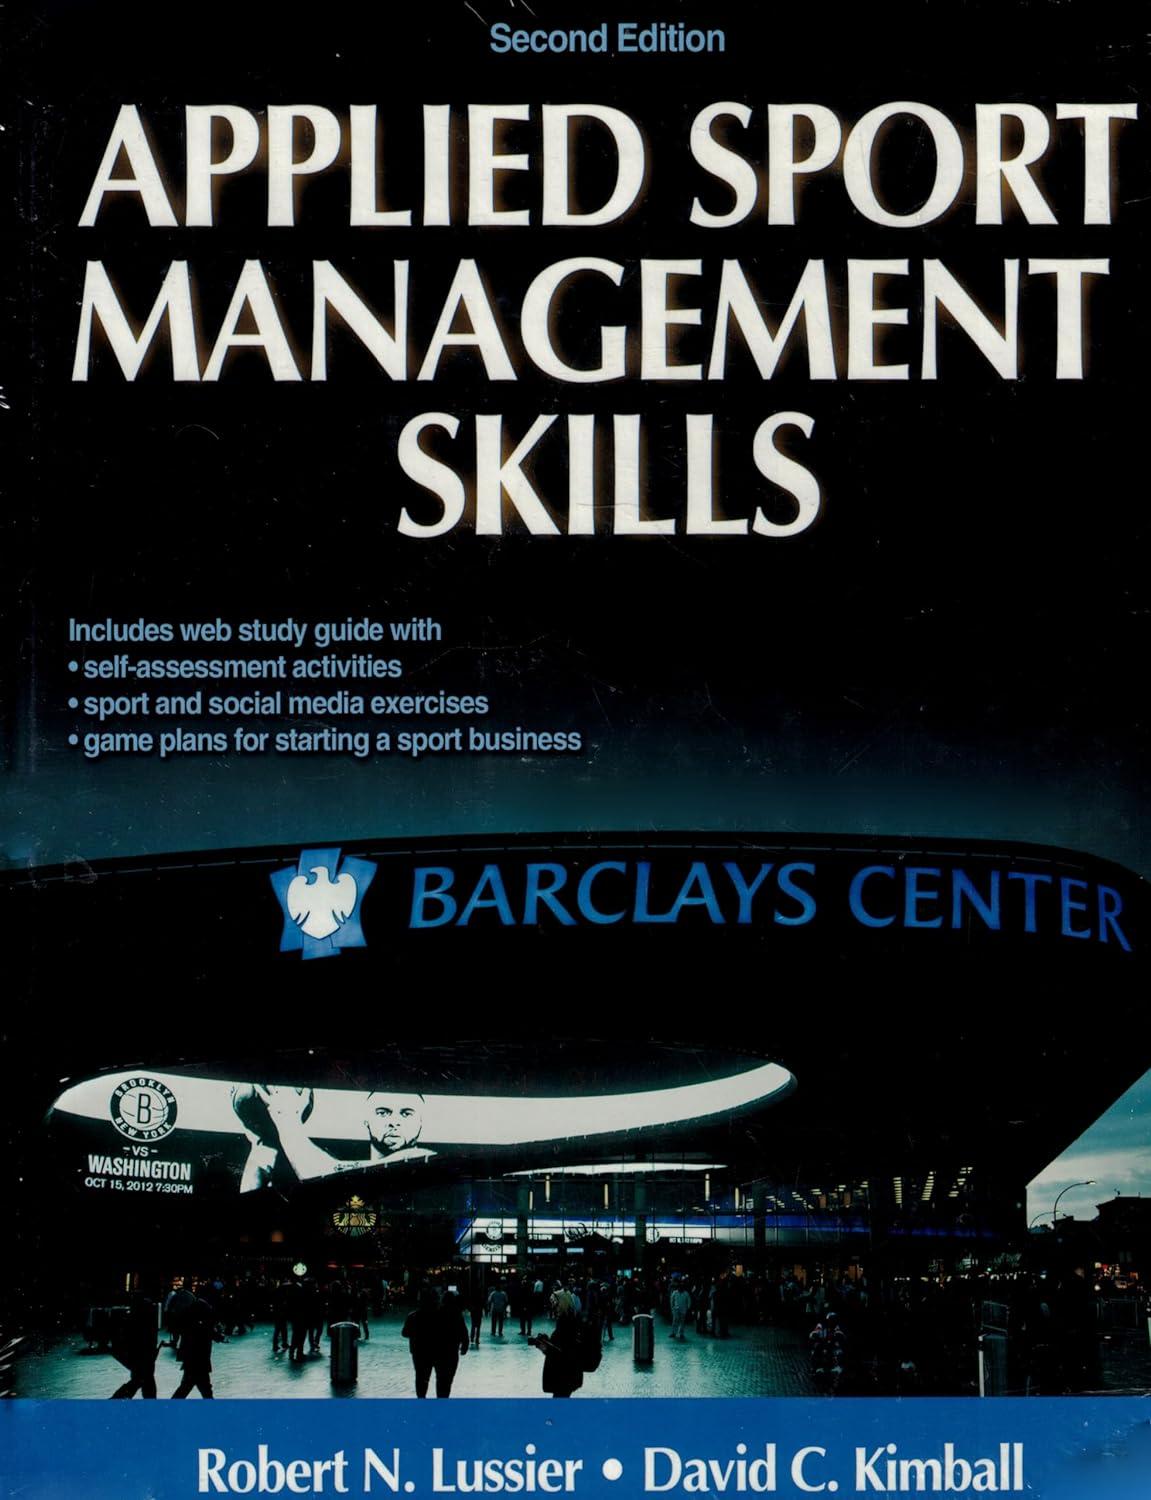 applied sport management skills 2nd edition robert n. lussier, david c. kimball 1450434150, 978-1450434157